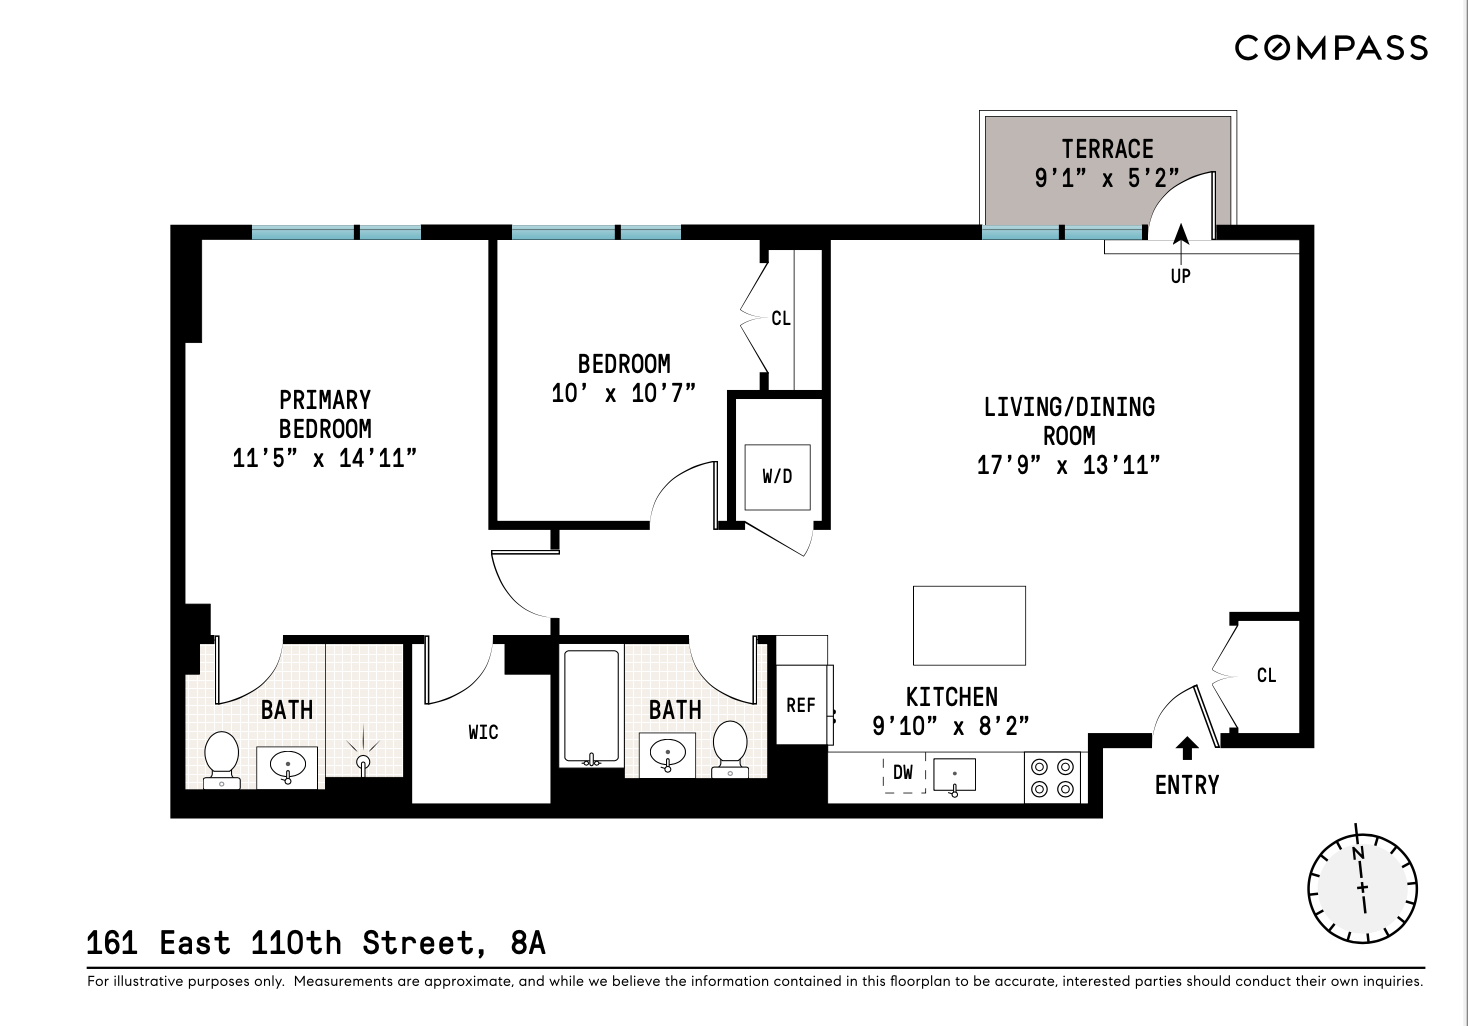 Floorplan for 161 East 110th Street, 8A